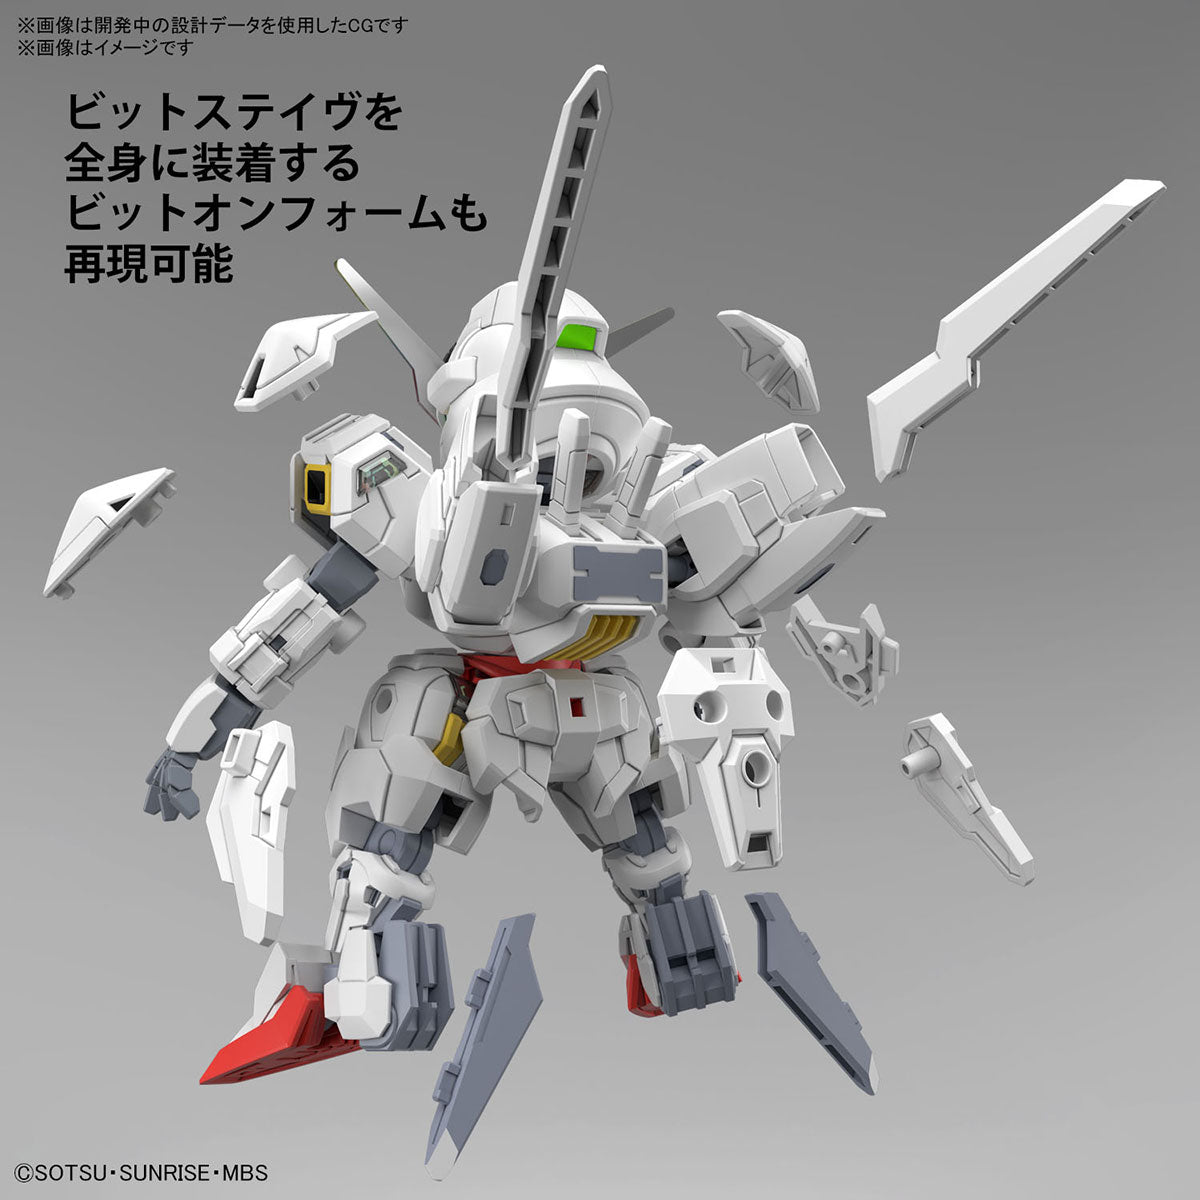 Bandai Gunpla SD Cross Silhouette SDCS Gundam Calibarn Plastic Model Action Toy VCA Singapore